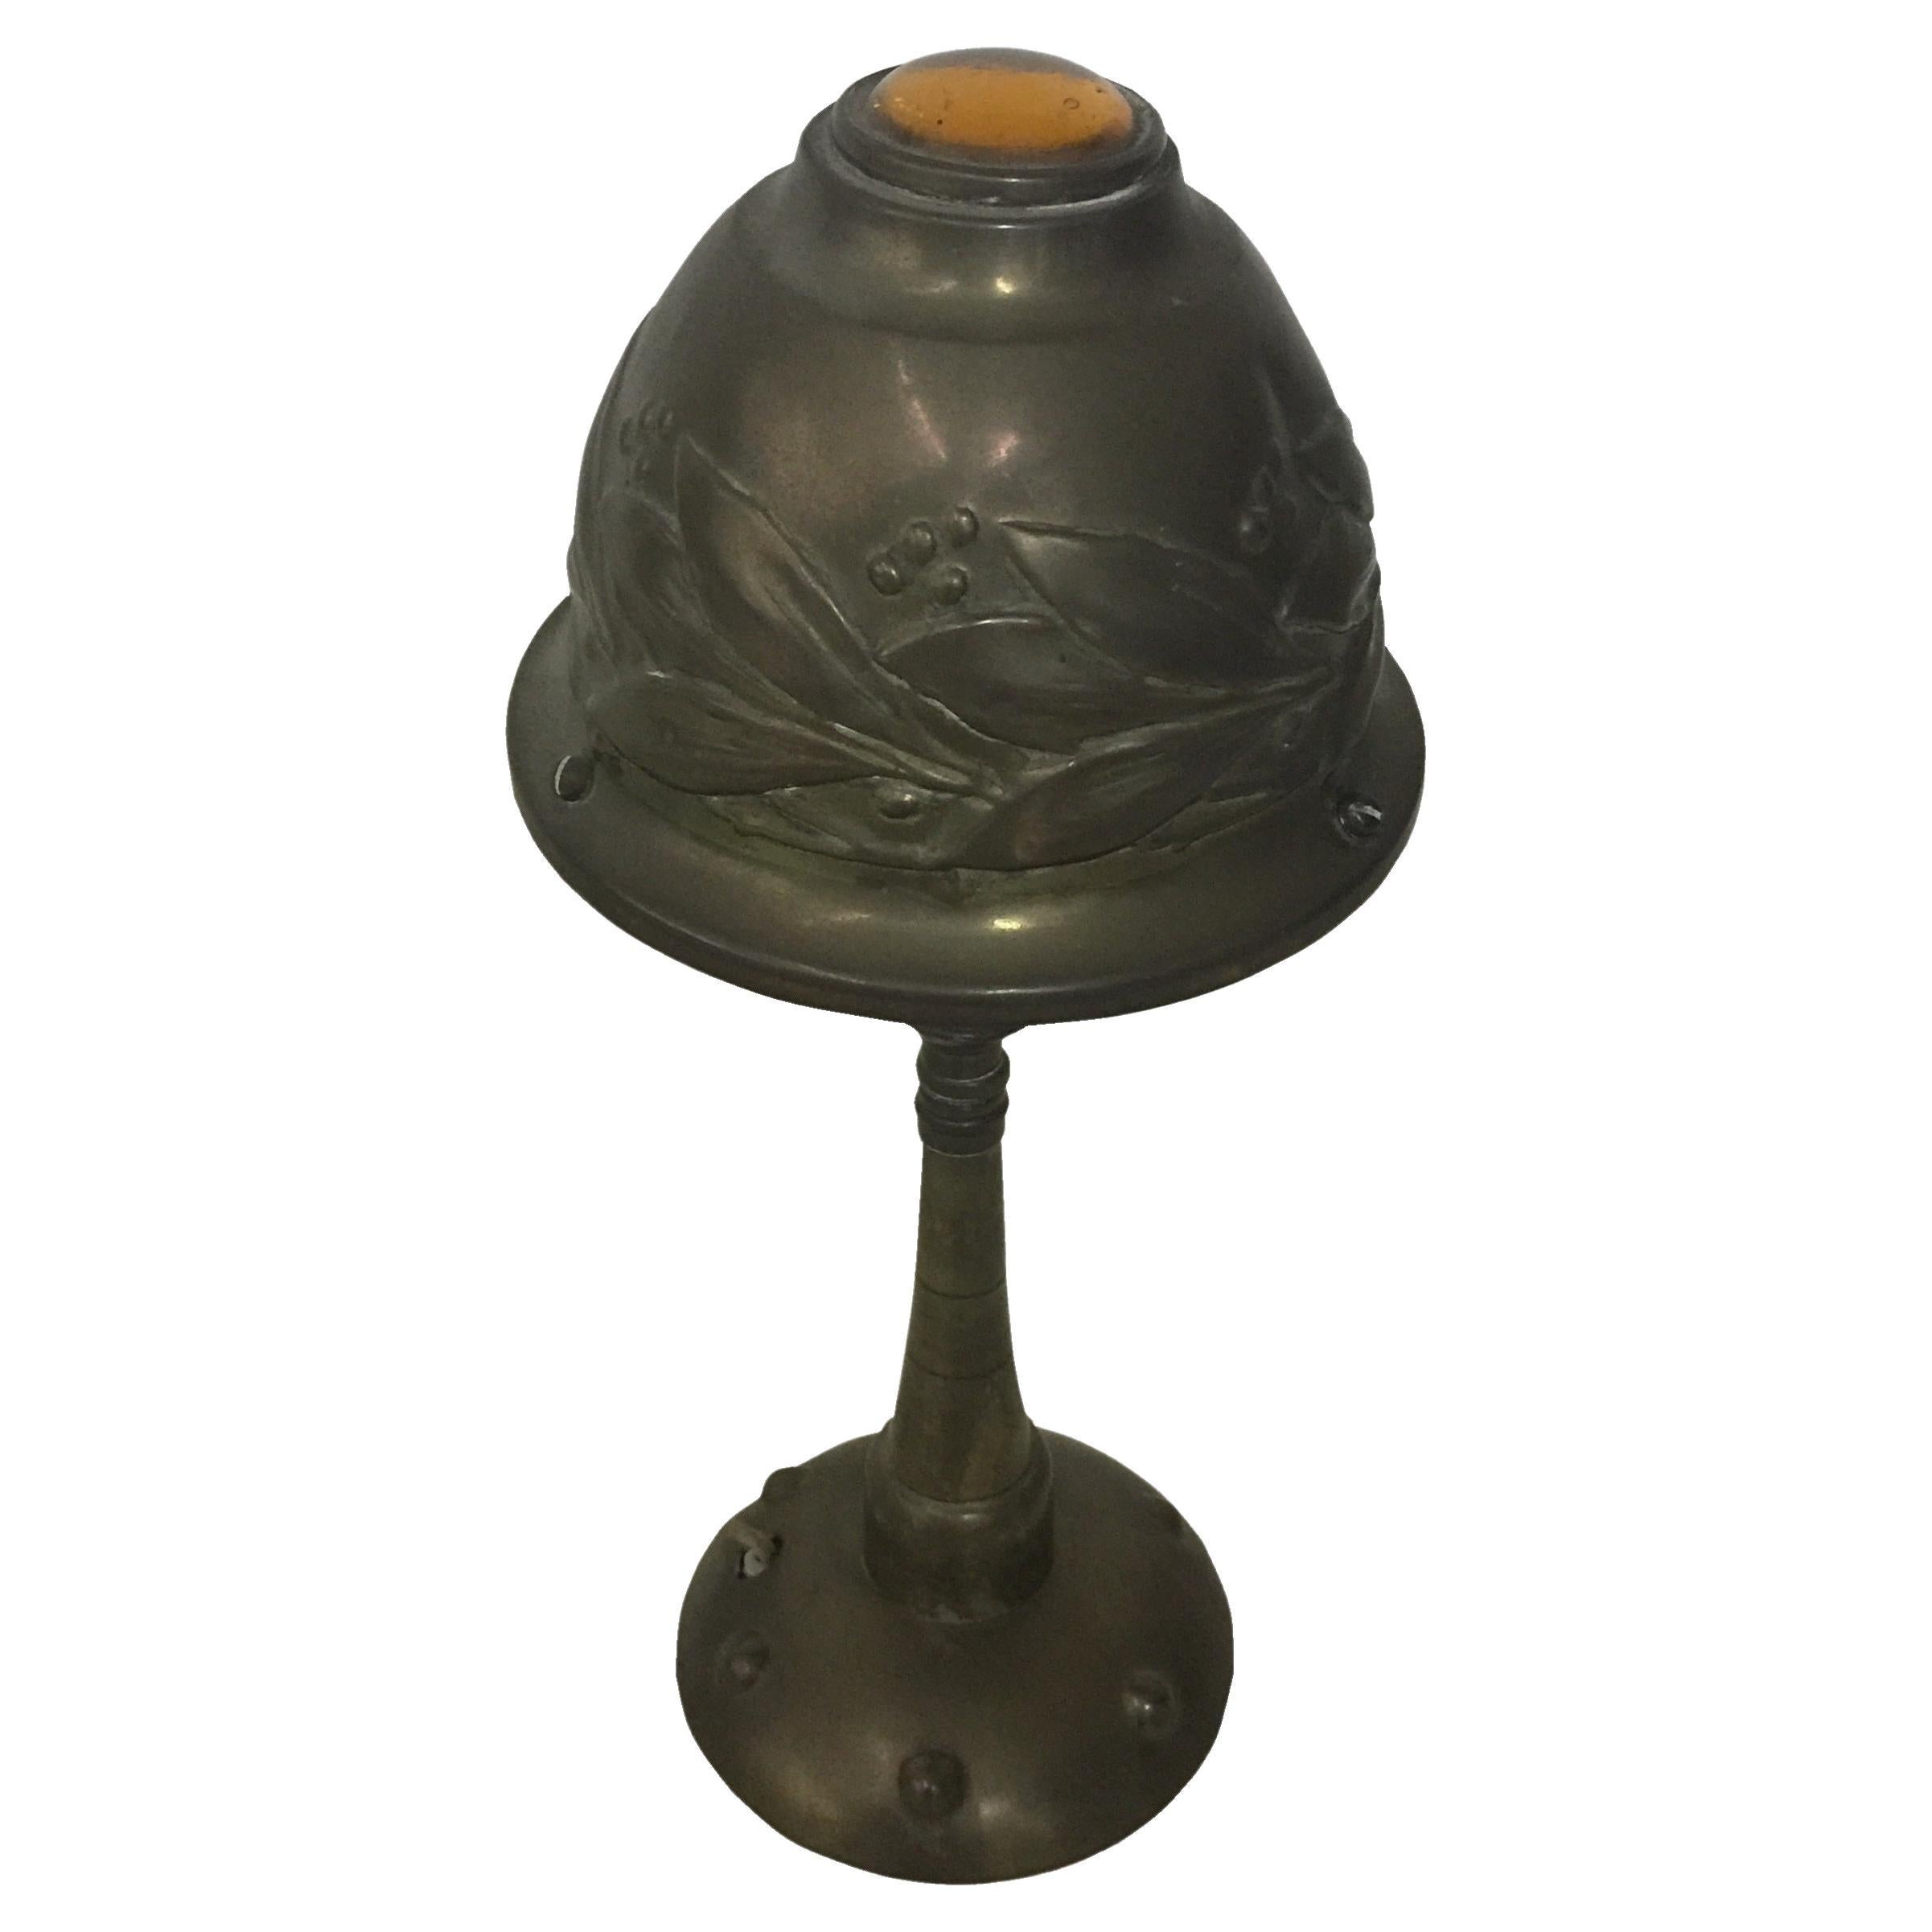 Jugendstil, Art Nouveau, Liberty -Table Lamp, 1900, Materials: Bronze and glass For Sale